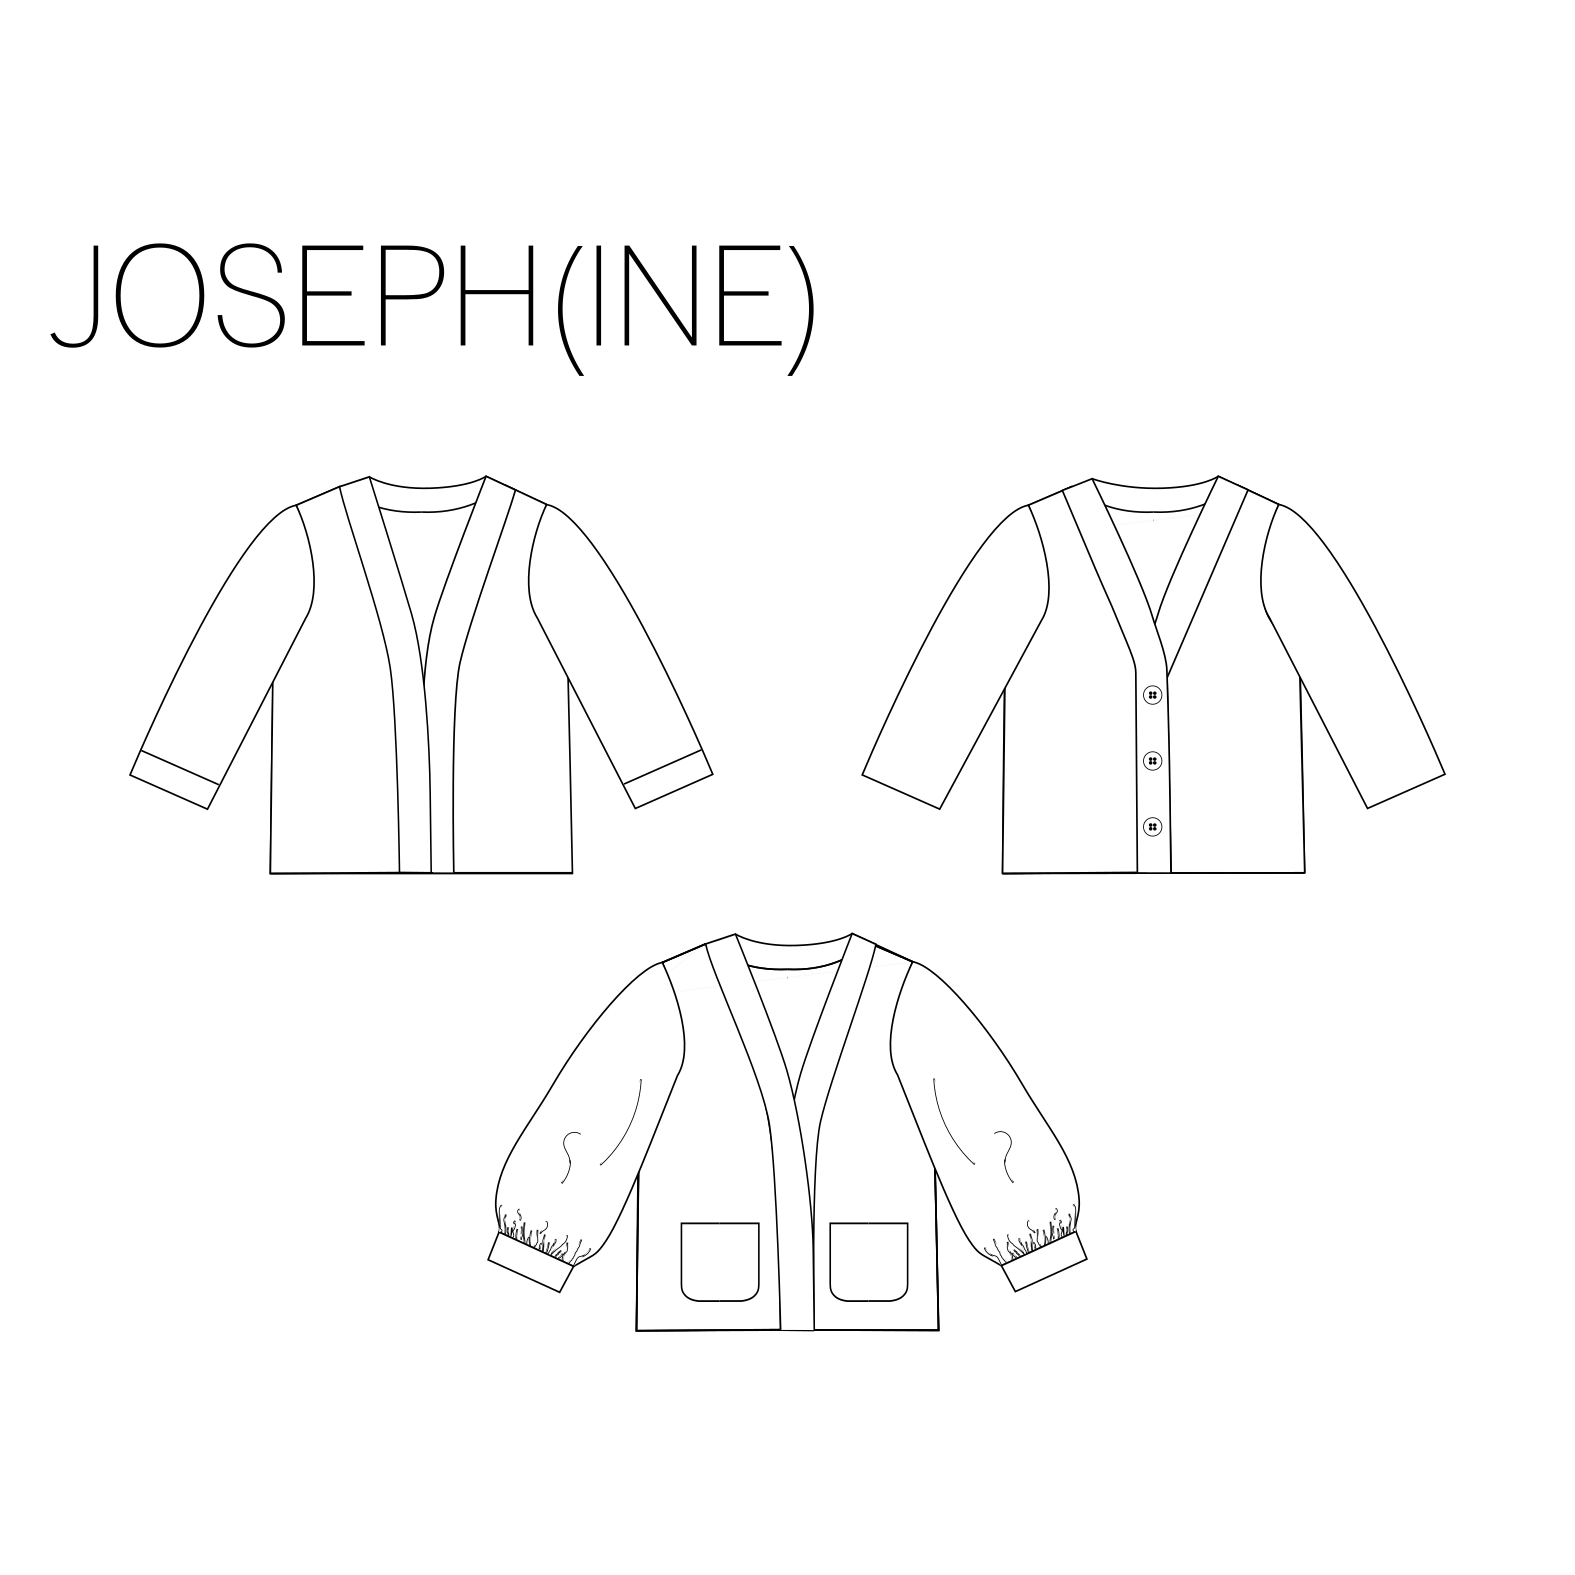 Joseph(ine) | Vest meisje & jongen | Papieren patroon